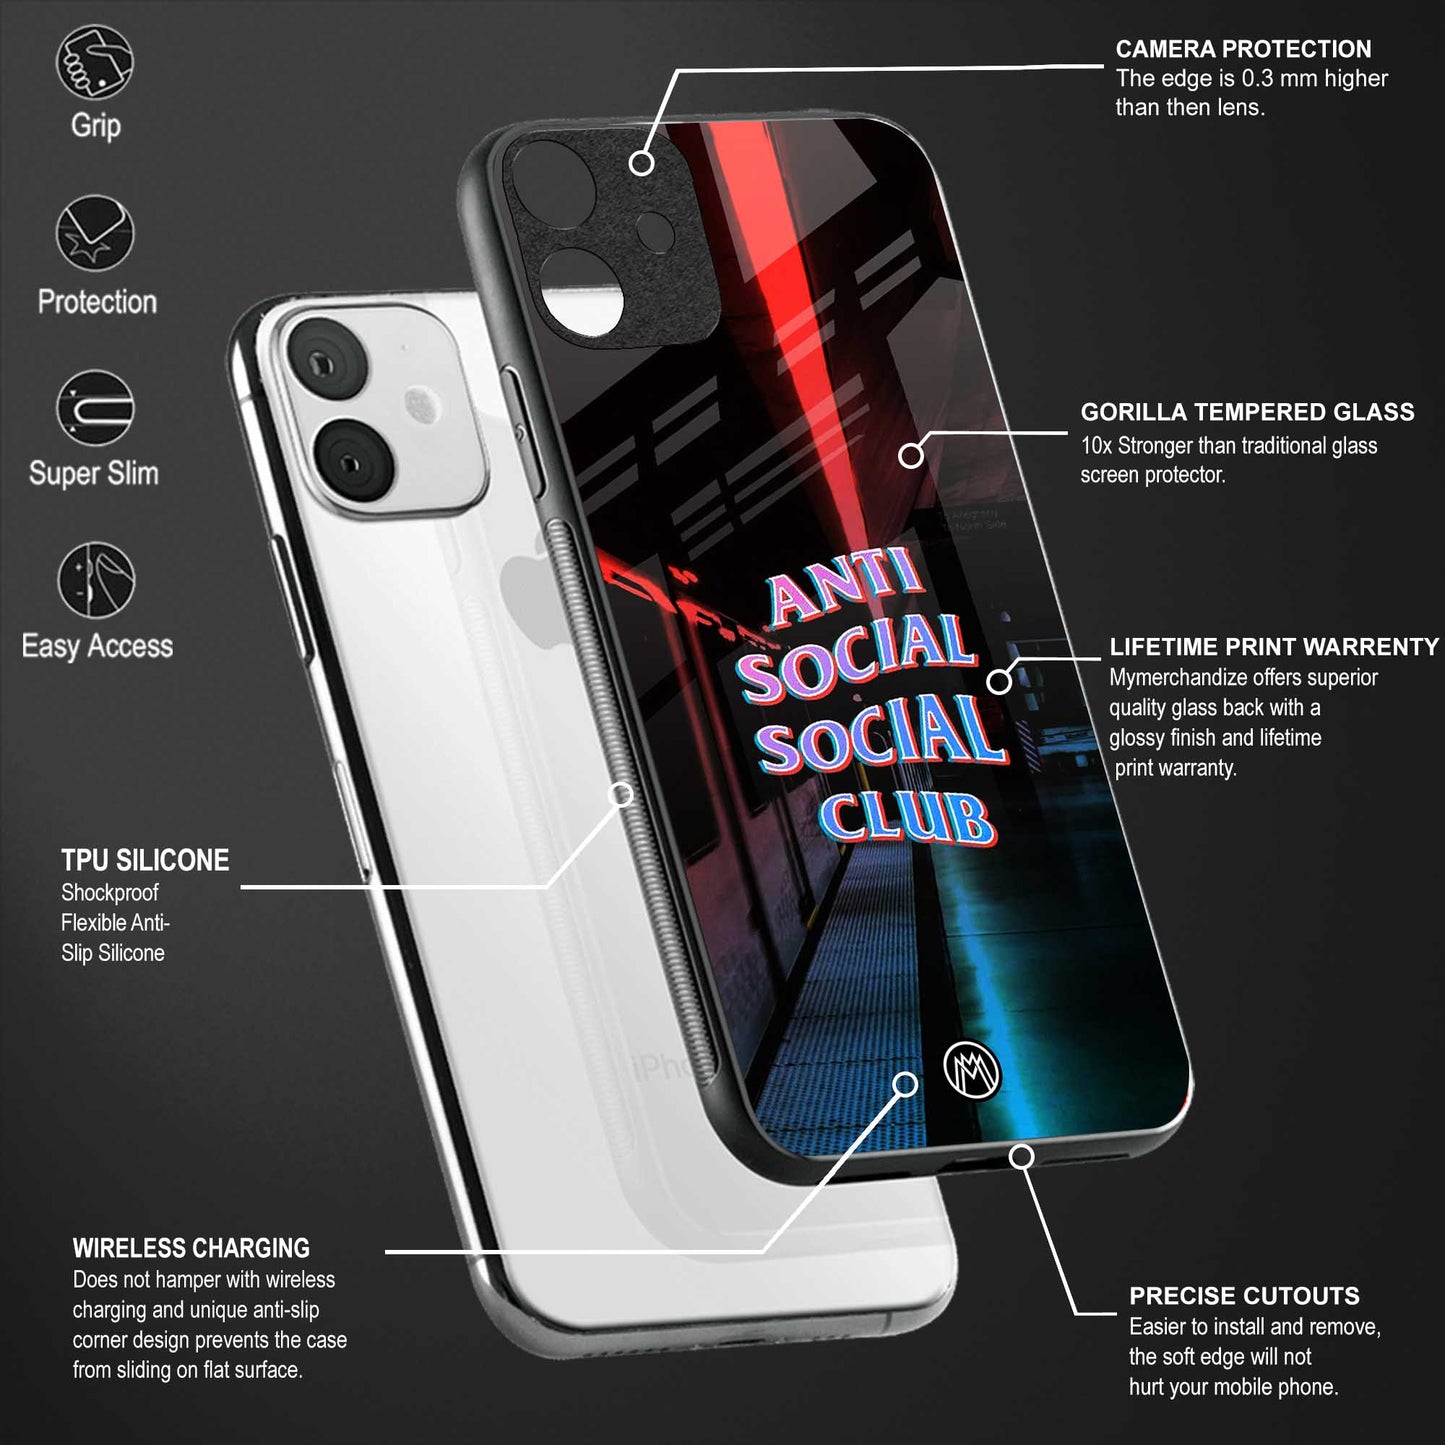 anti social social club back phone cover | glass case for vivo y72